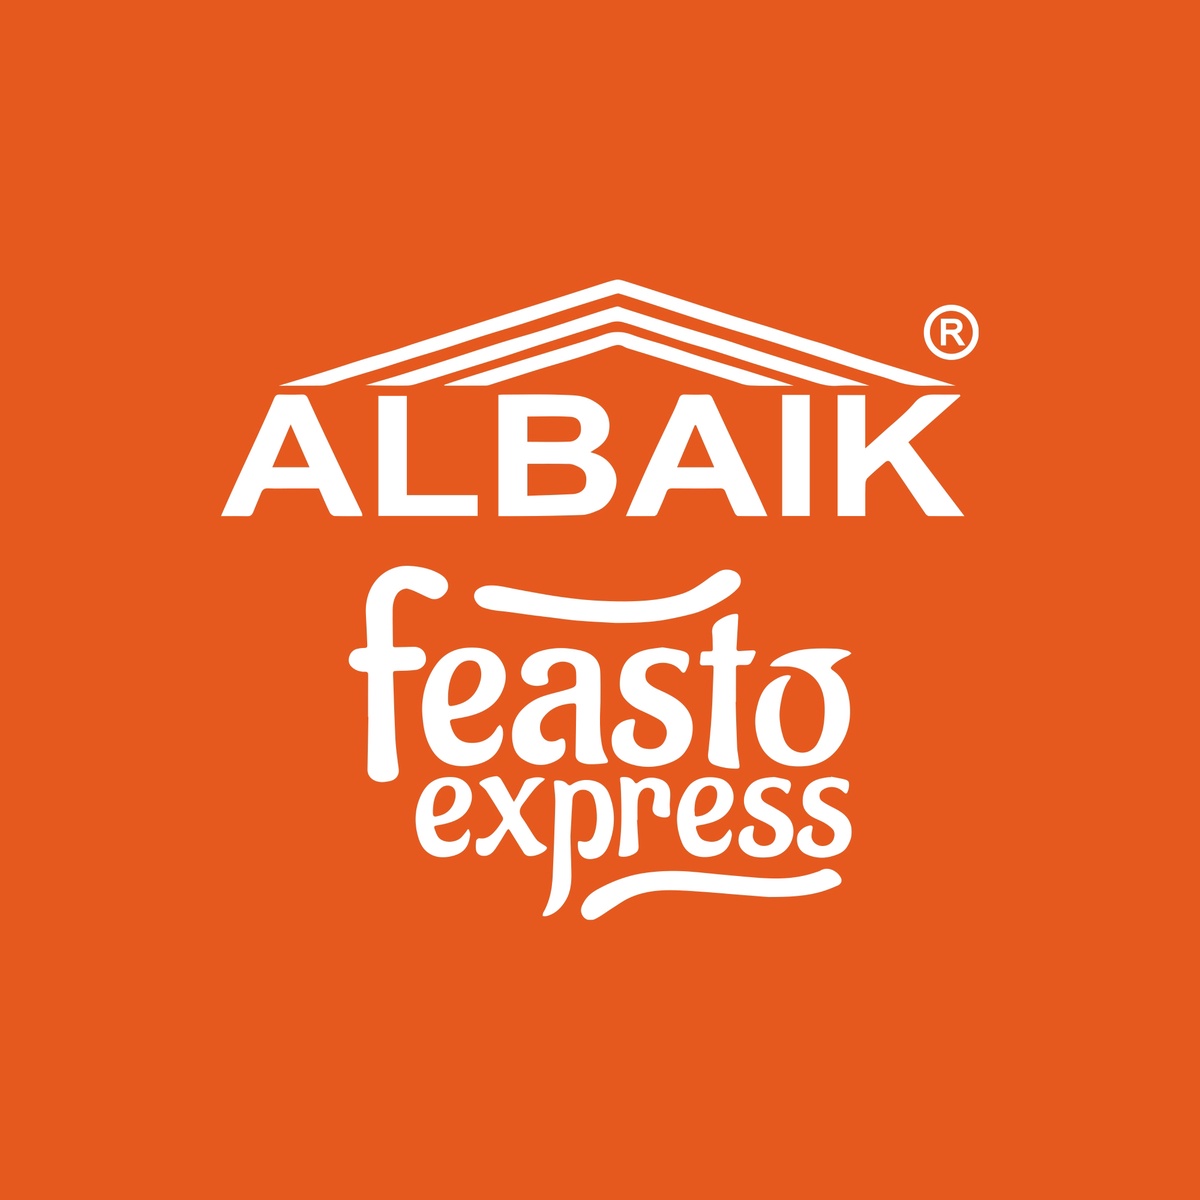 Albaik India | Fast Food Restaurant Chain